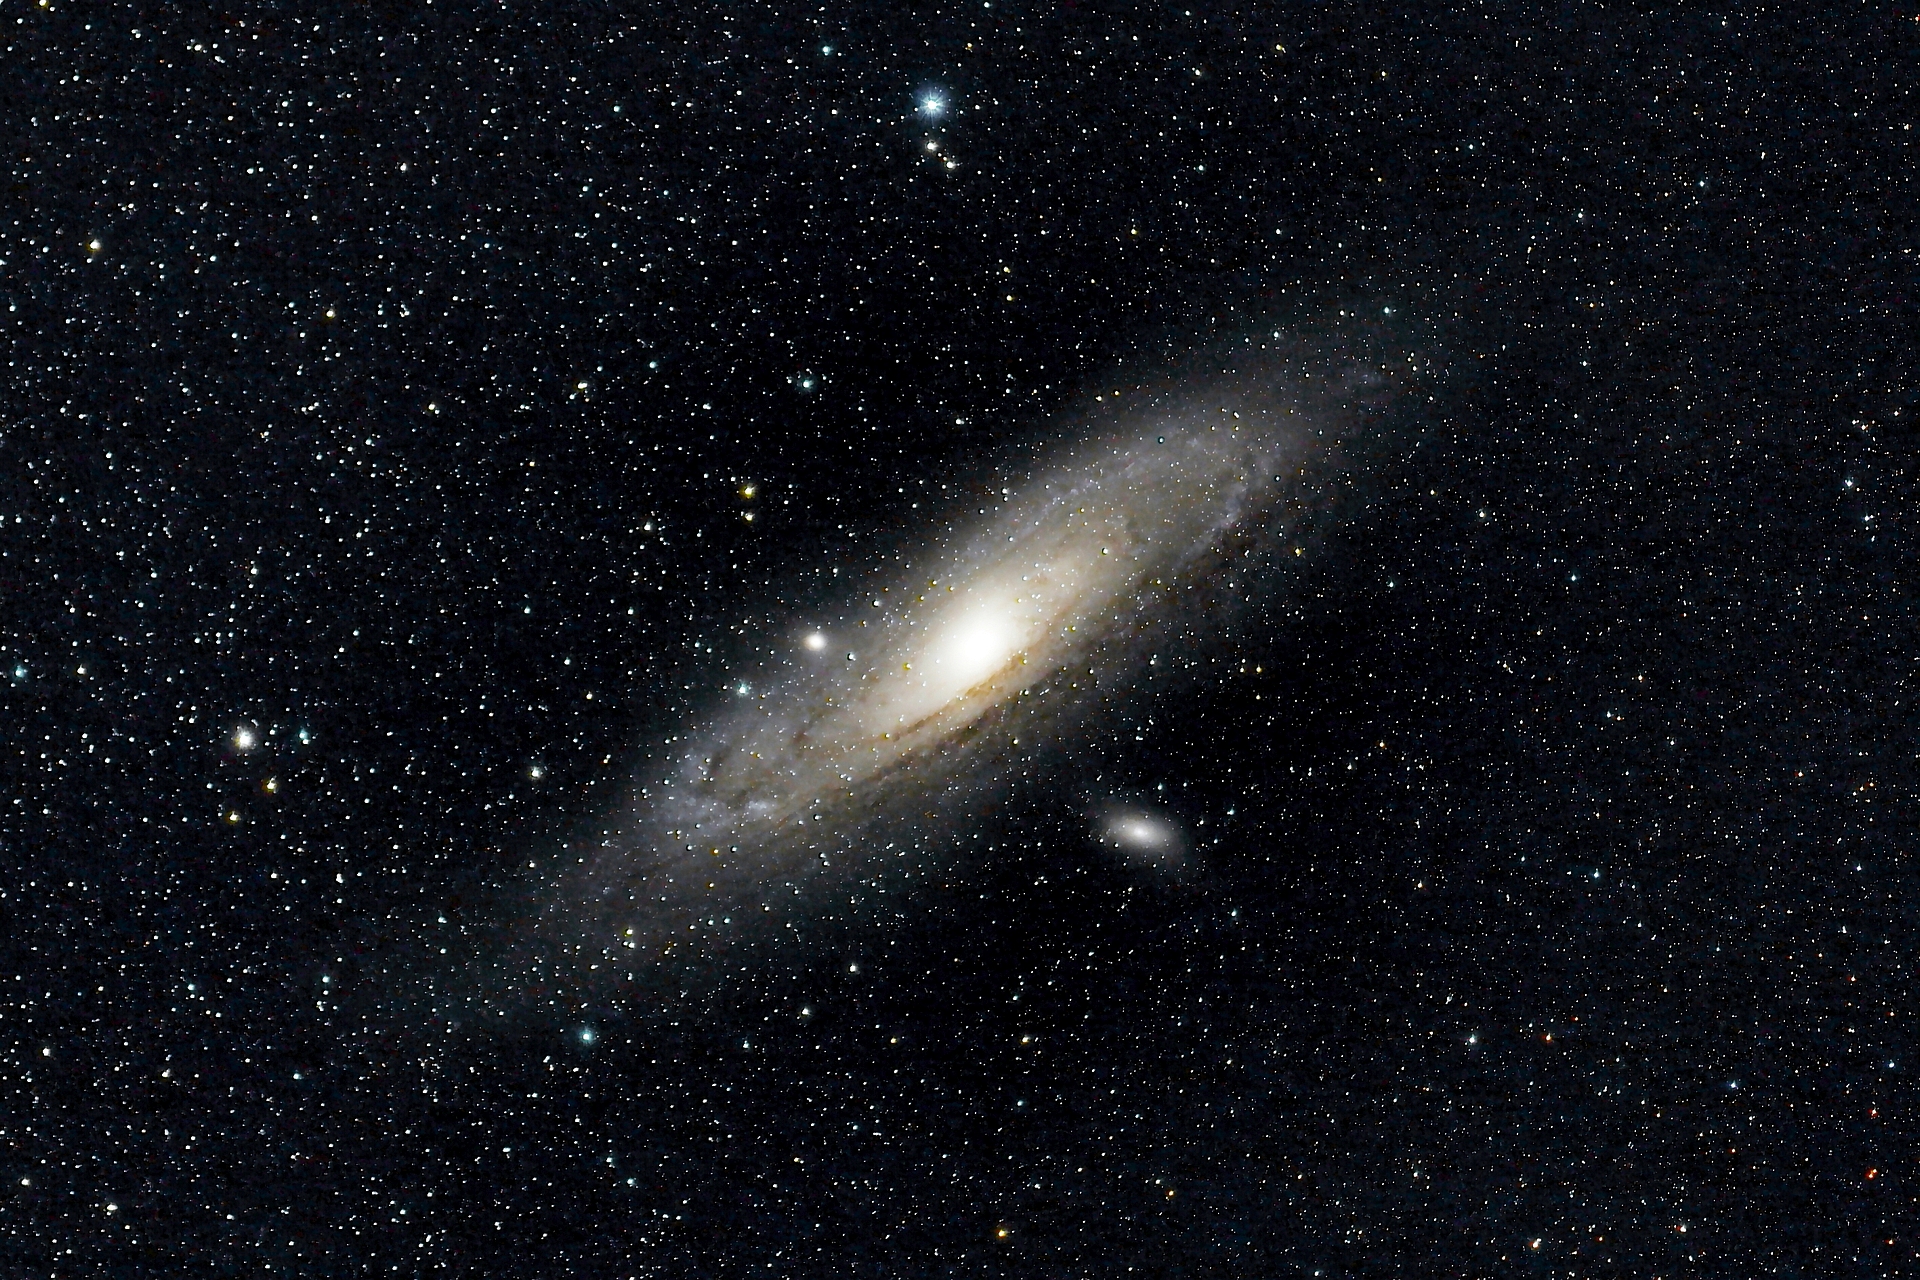 Andromedagalaxie M 31